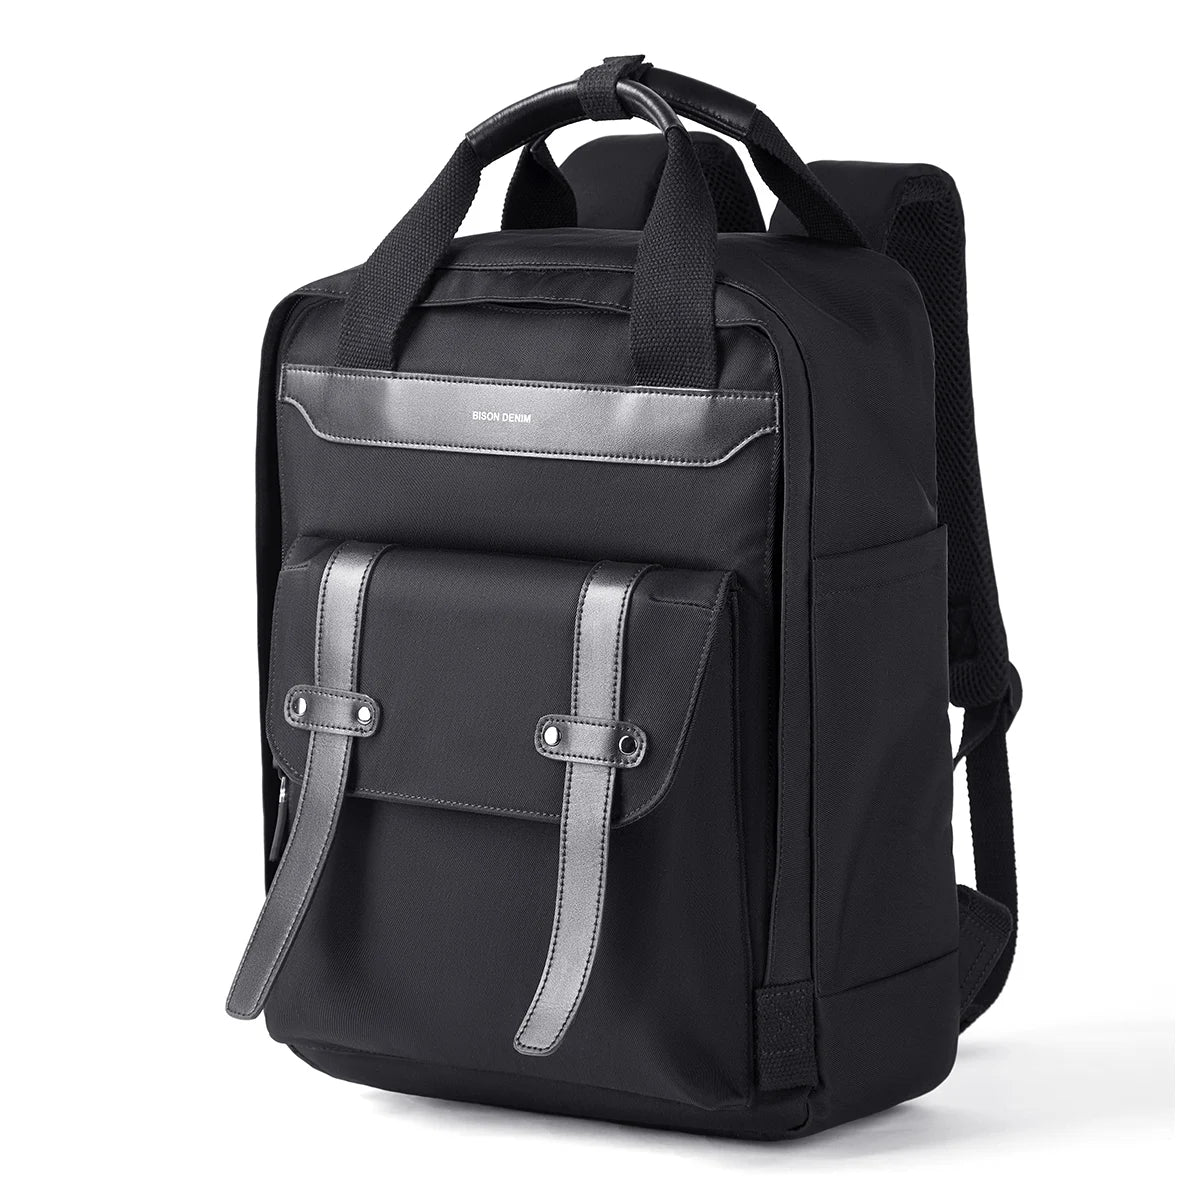 BISONDENIM Durable Oxford Travel Backpack Student School Bag N20248 Black